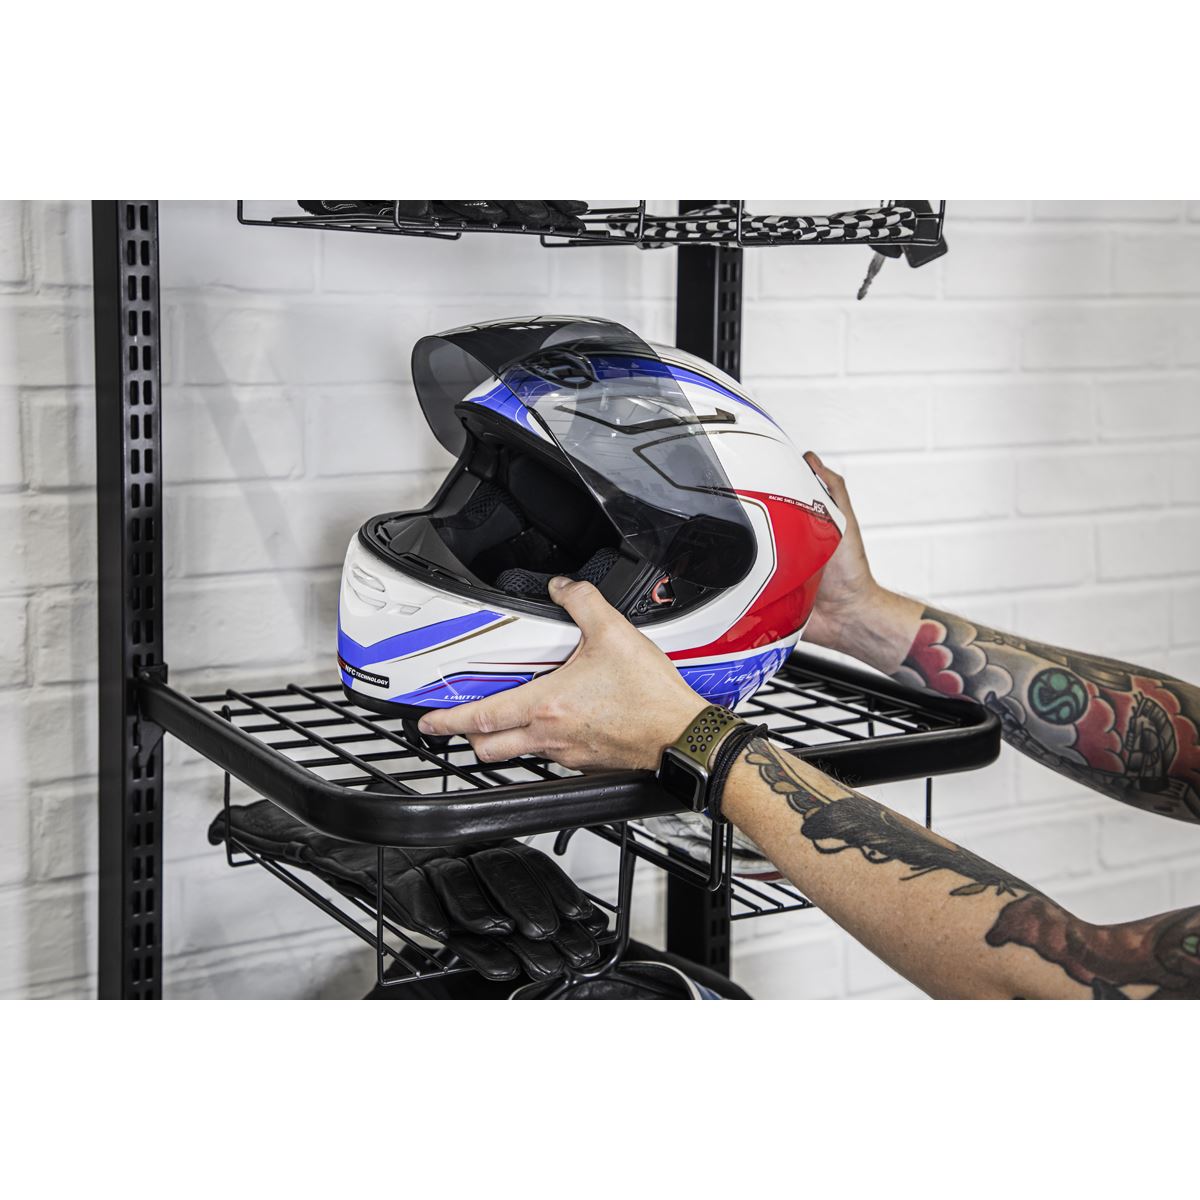 Sealey Motorcycle Helmet & Gear Tidy, Freestanding